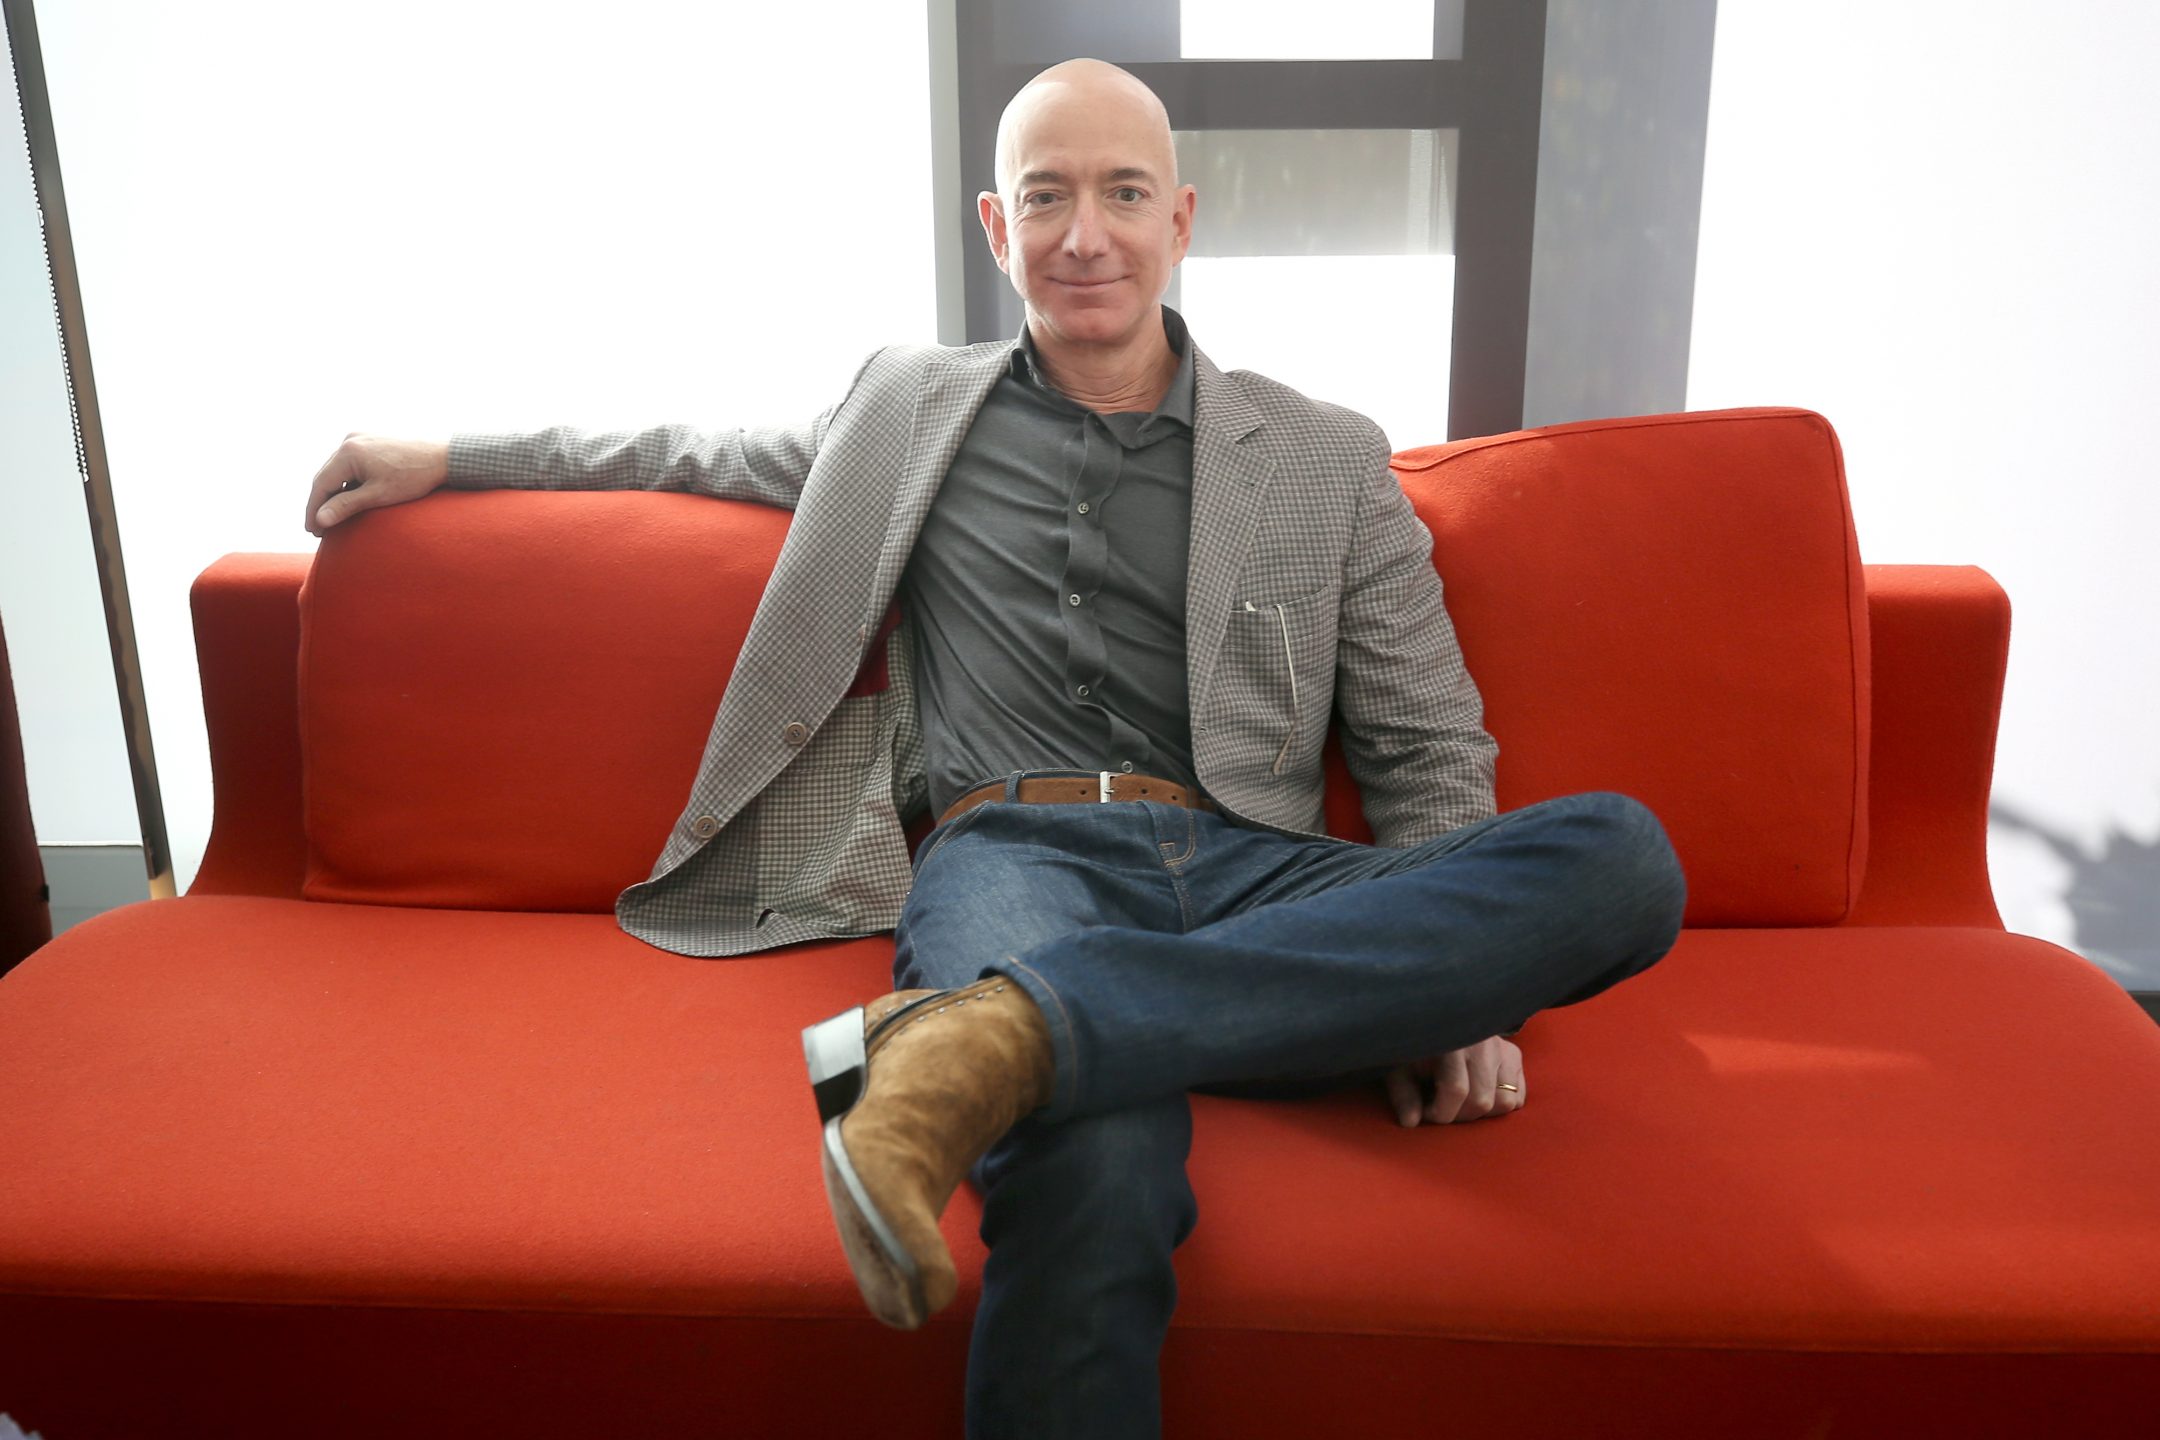 Amazon Ceo Jeff Bezos